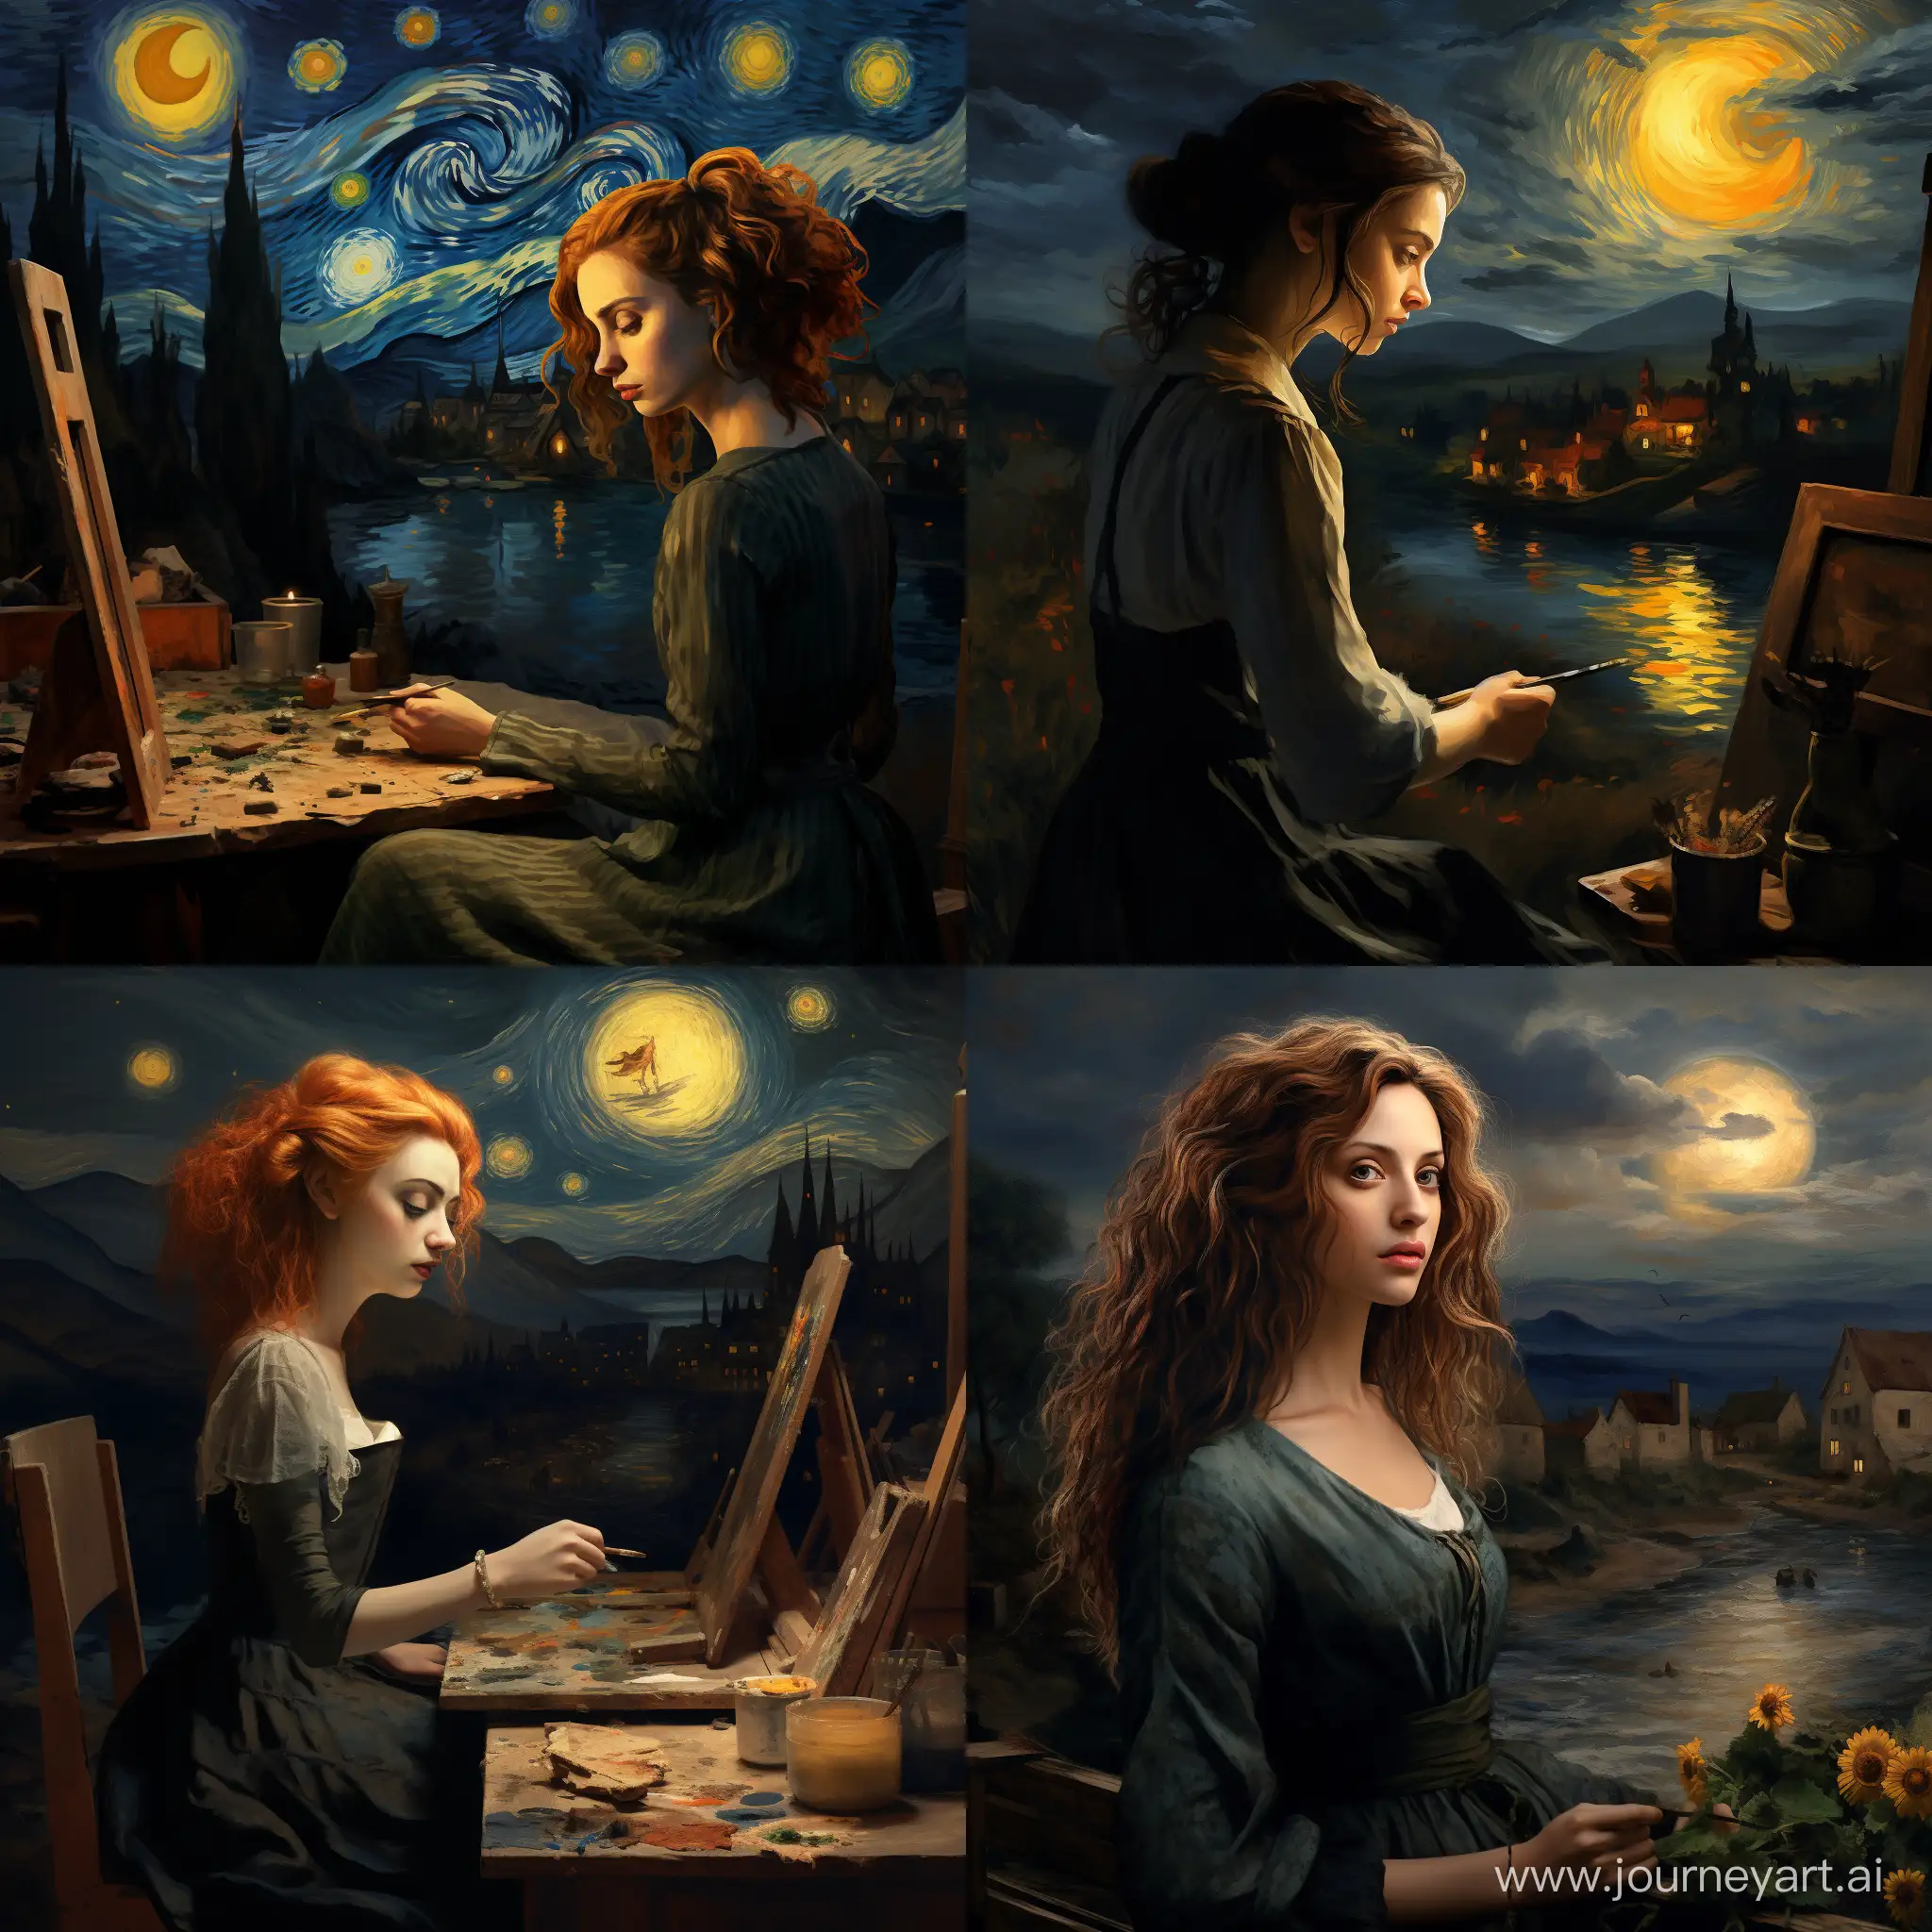 Whimsical-Fusion-Van-Gogh-and-Tim-Burton-Inspired-Woman-in-18thCentury-Scene